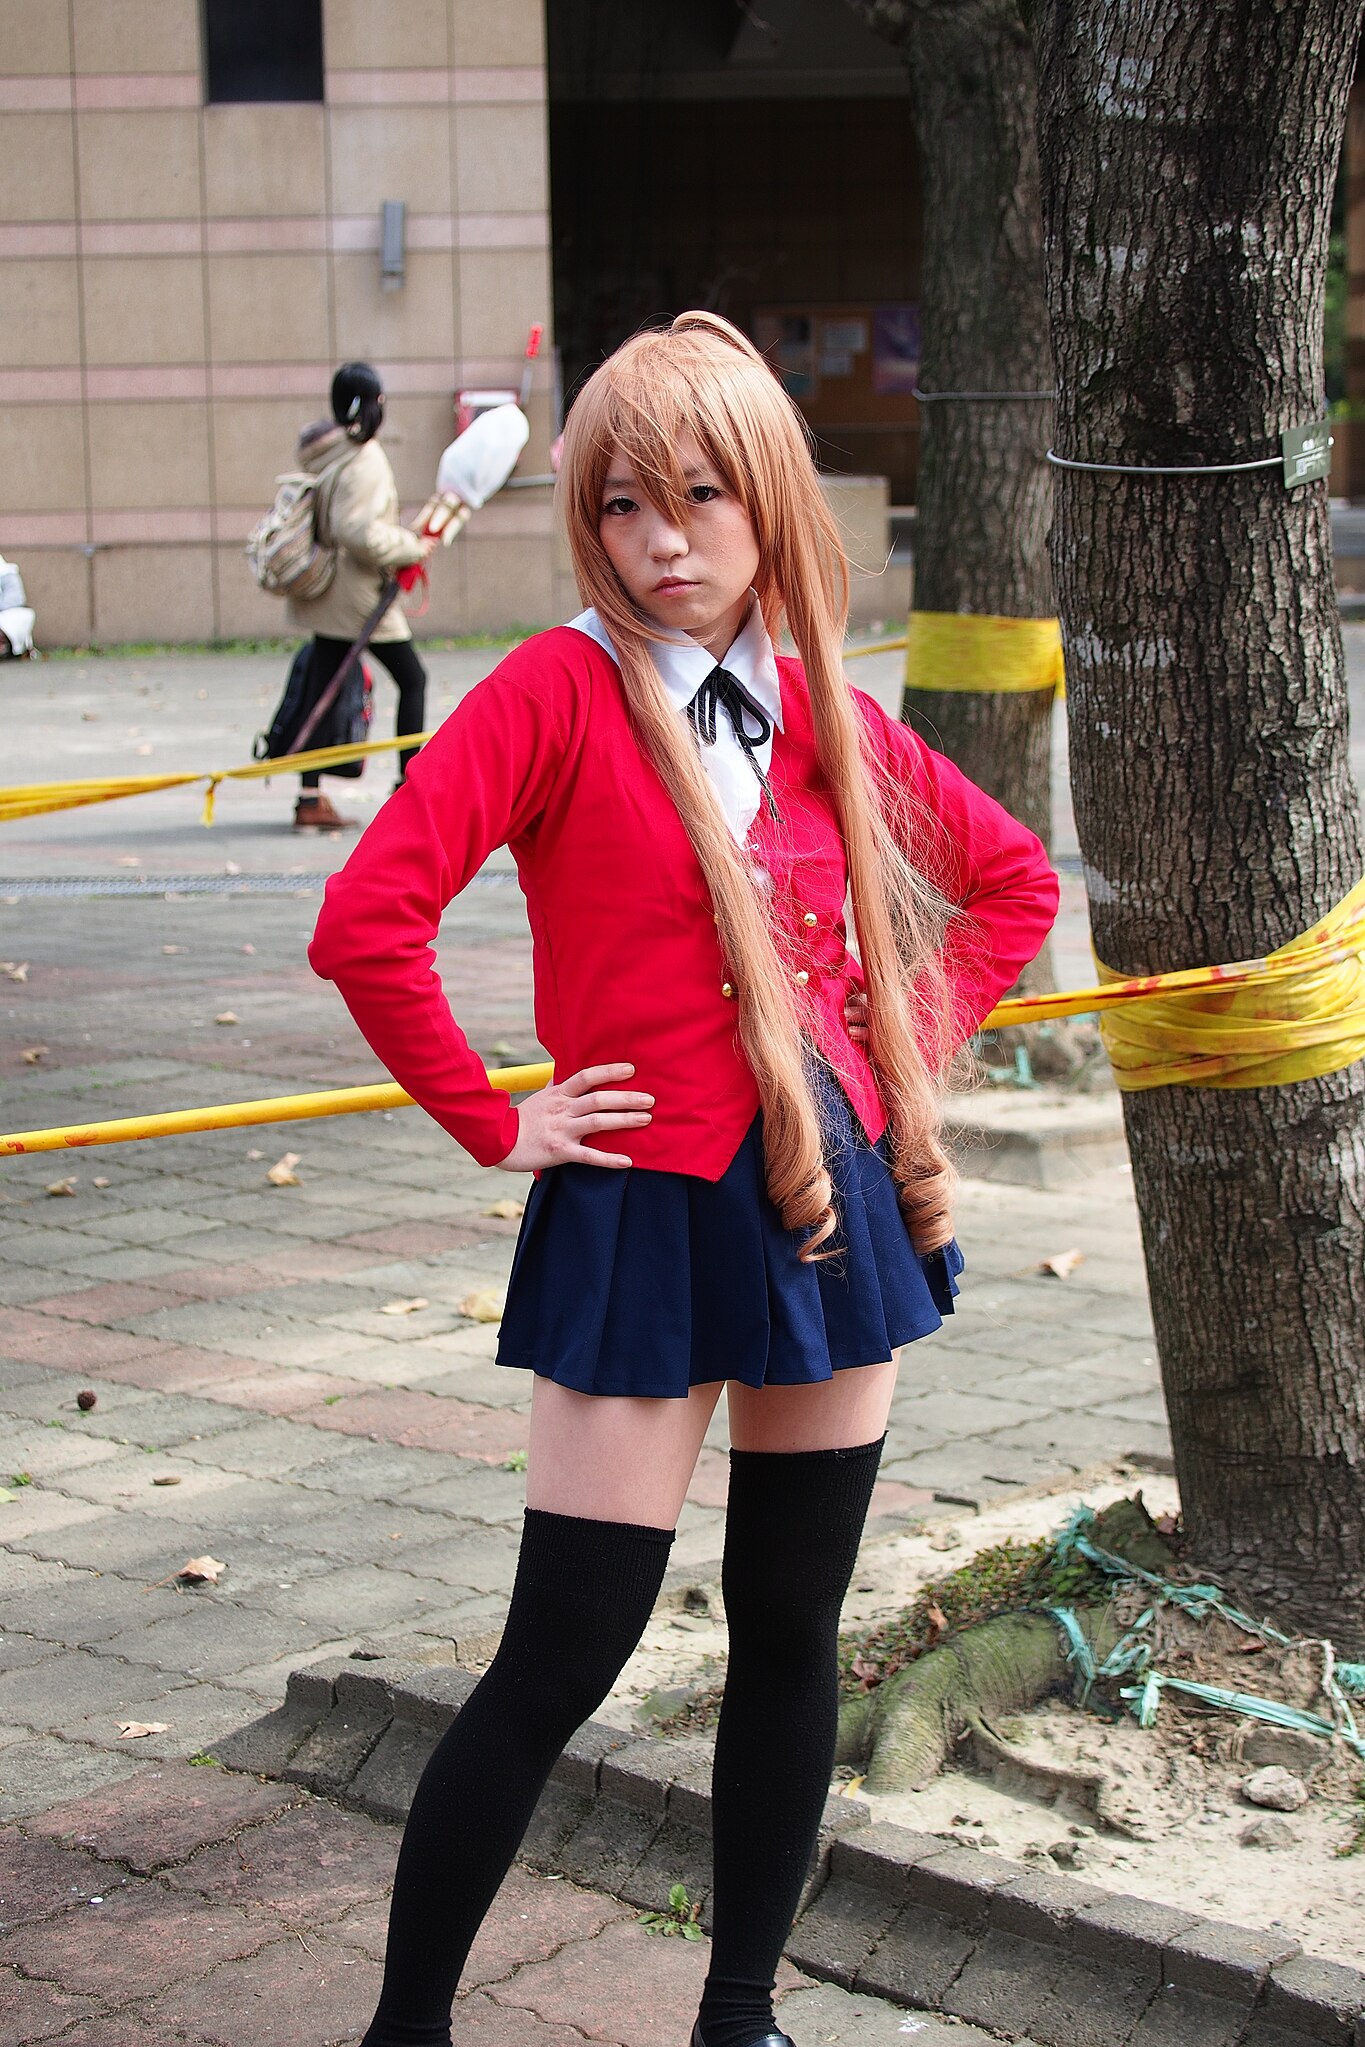 File:Cosplay of Taiga Aisaka from Toradora at Anime Boston 2013.jpg -  Wikimedia Commons